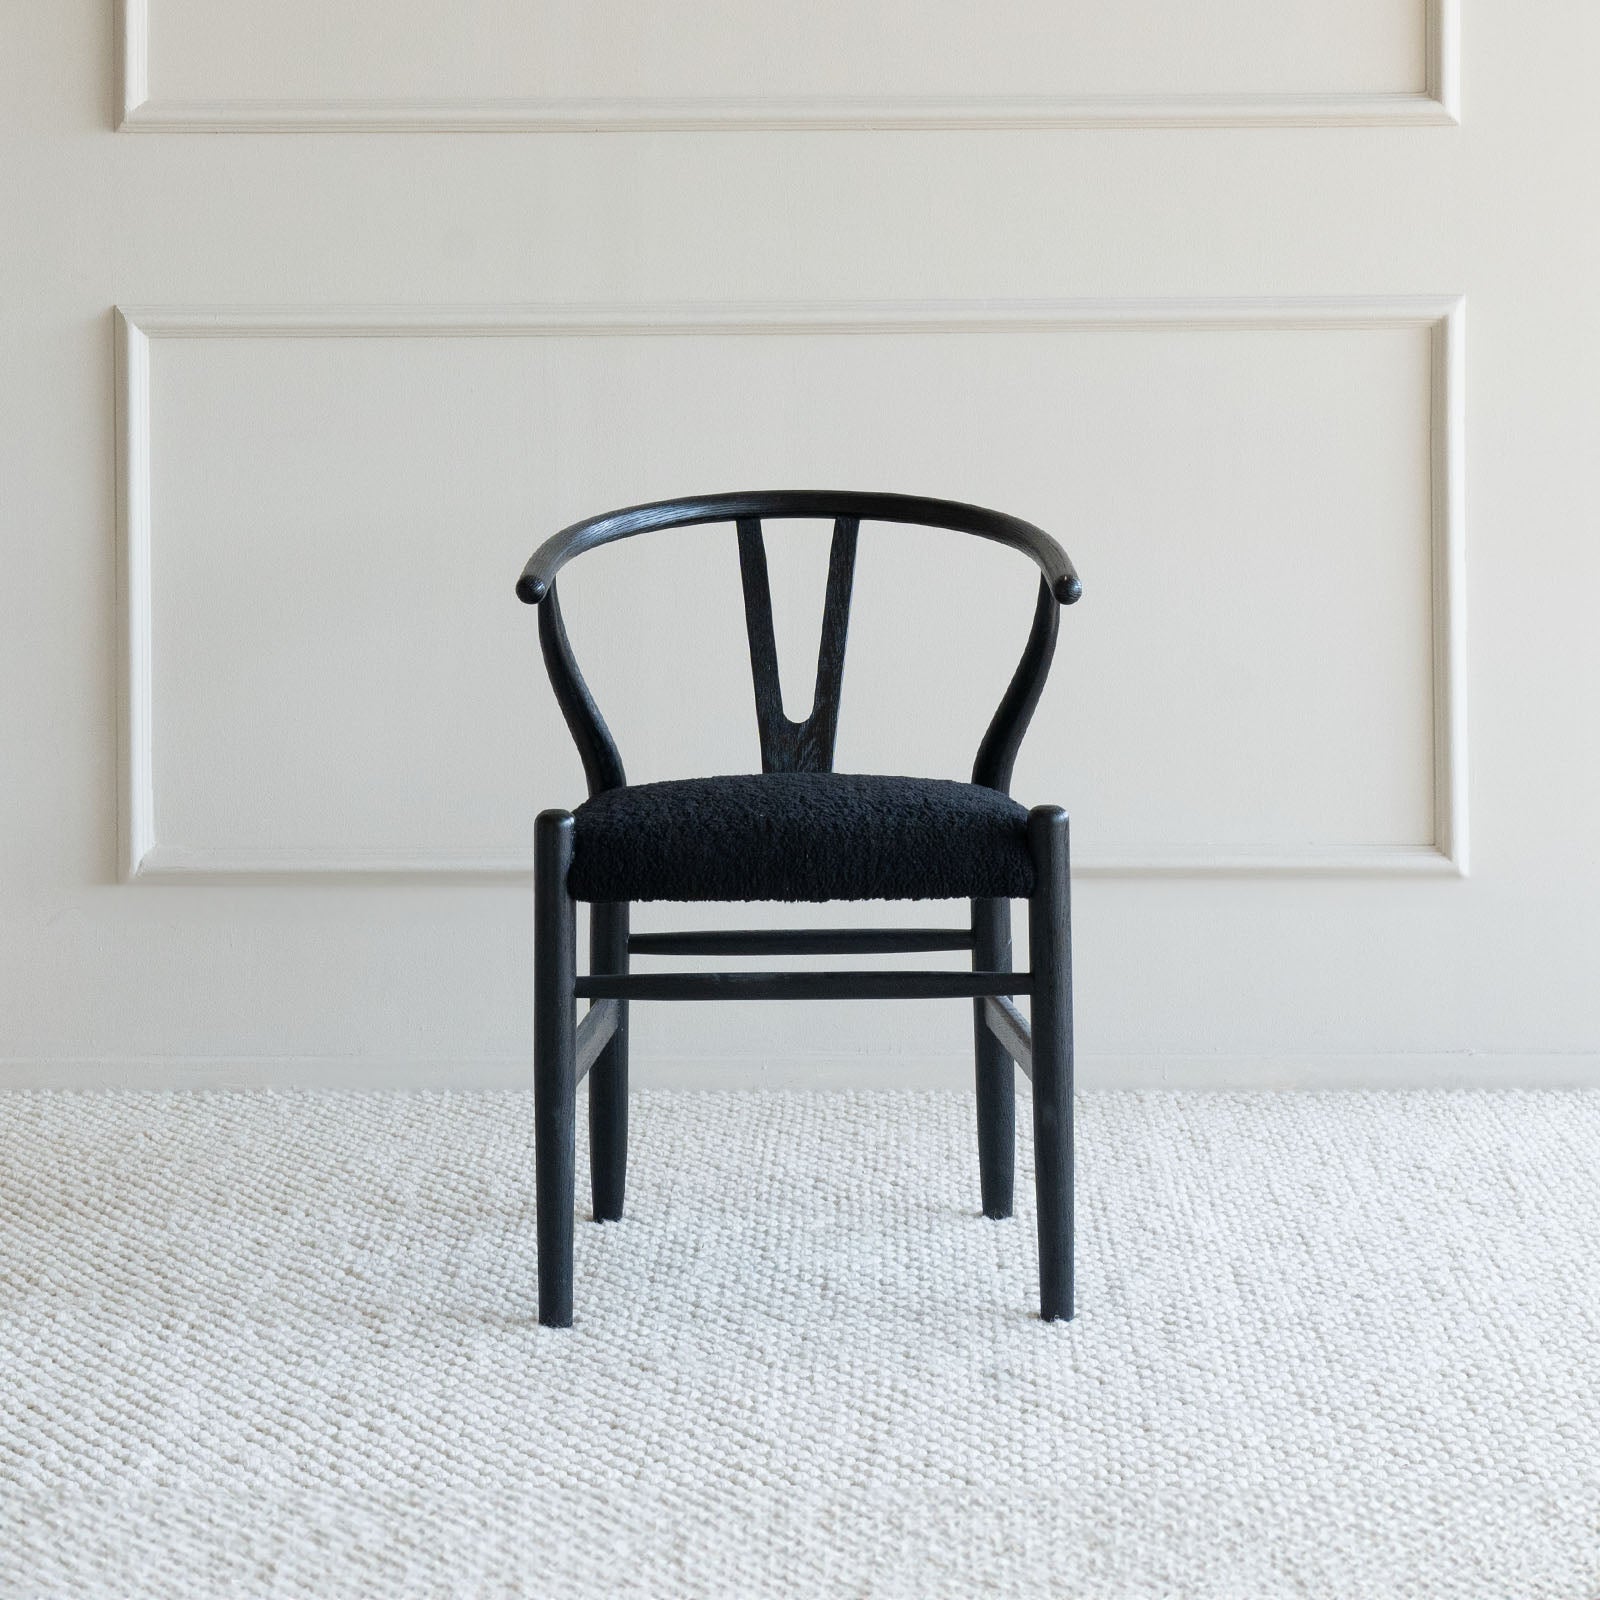 Wishbone Chair(s)  - WS Living - UAE - Dining Chairs Wood and steel Furnitures - Dubai